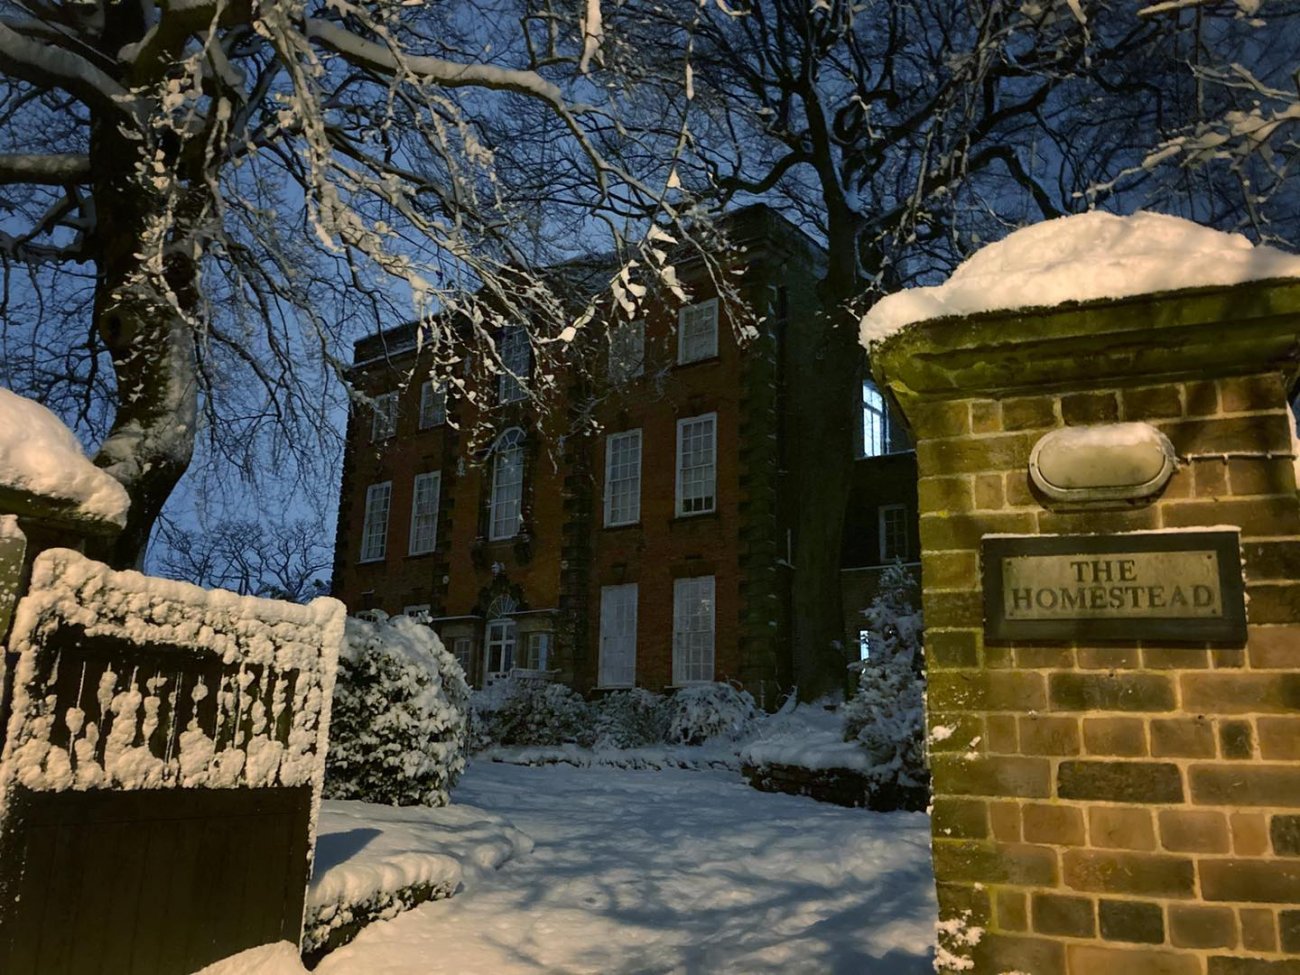 Photograph of Snowy Spondon Nights - The Homestead